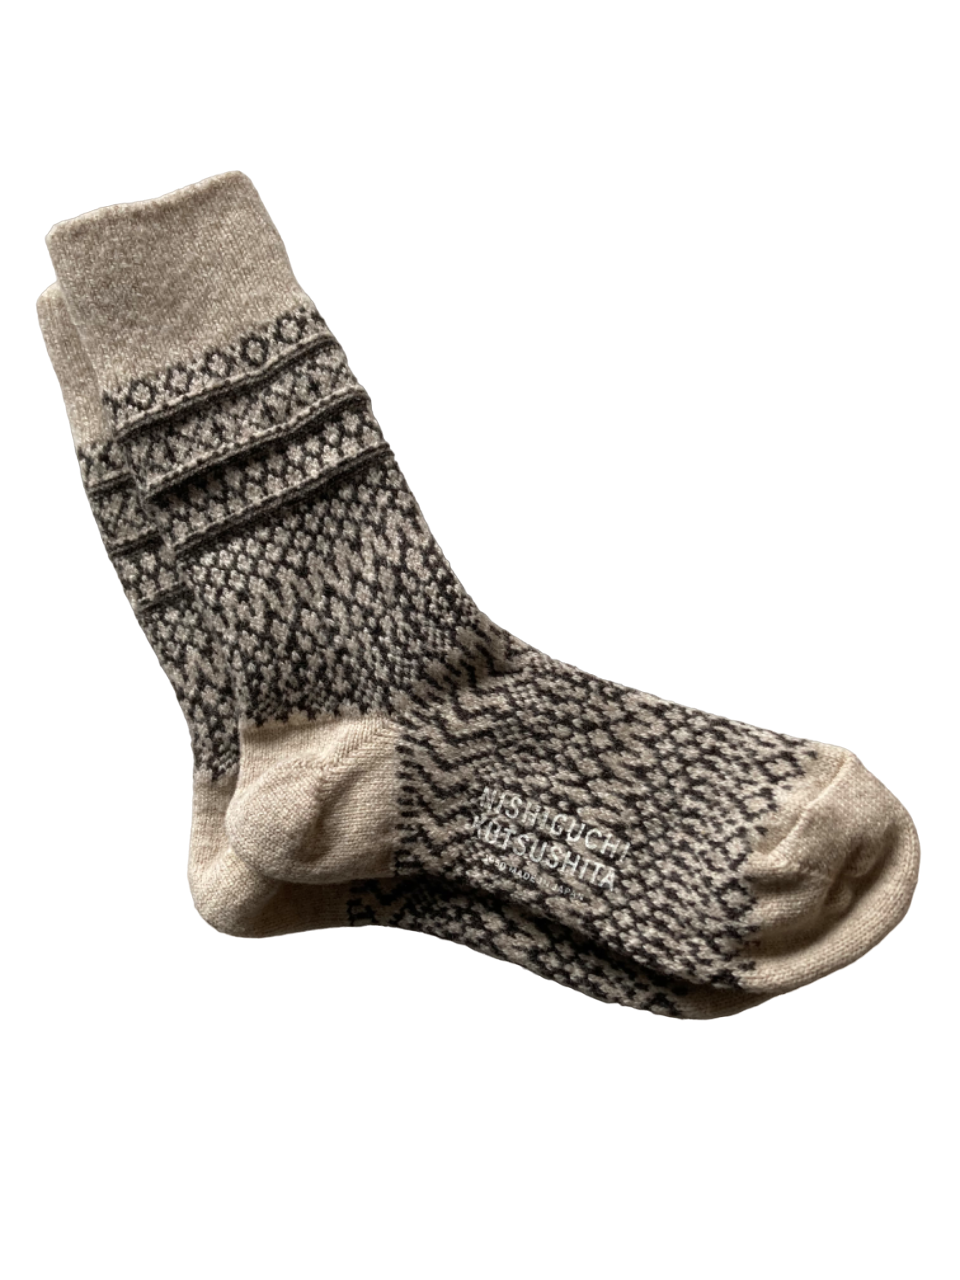 Nishiguchi Kutsushita Wool Jacquard Oslo Socks in Oatmeal